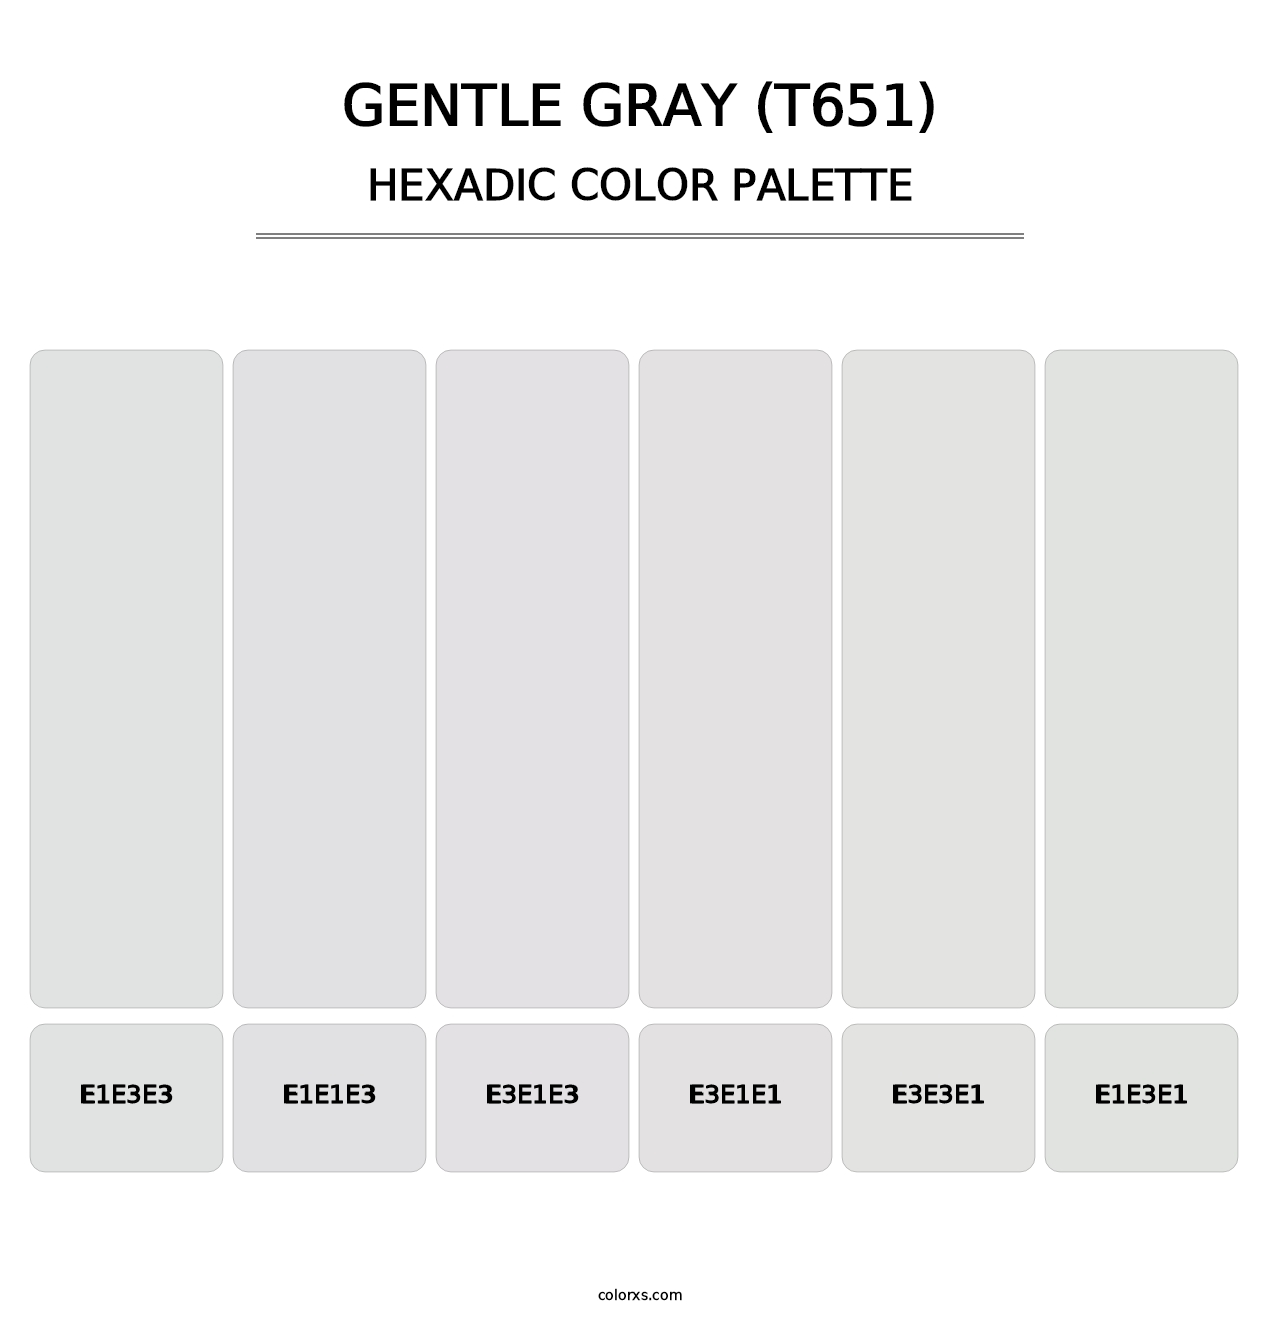 Gentle Gray (T651) - Hexadic Color Palette